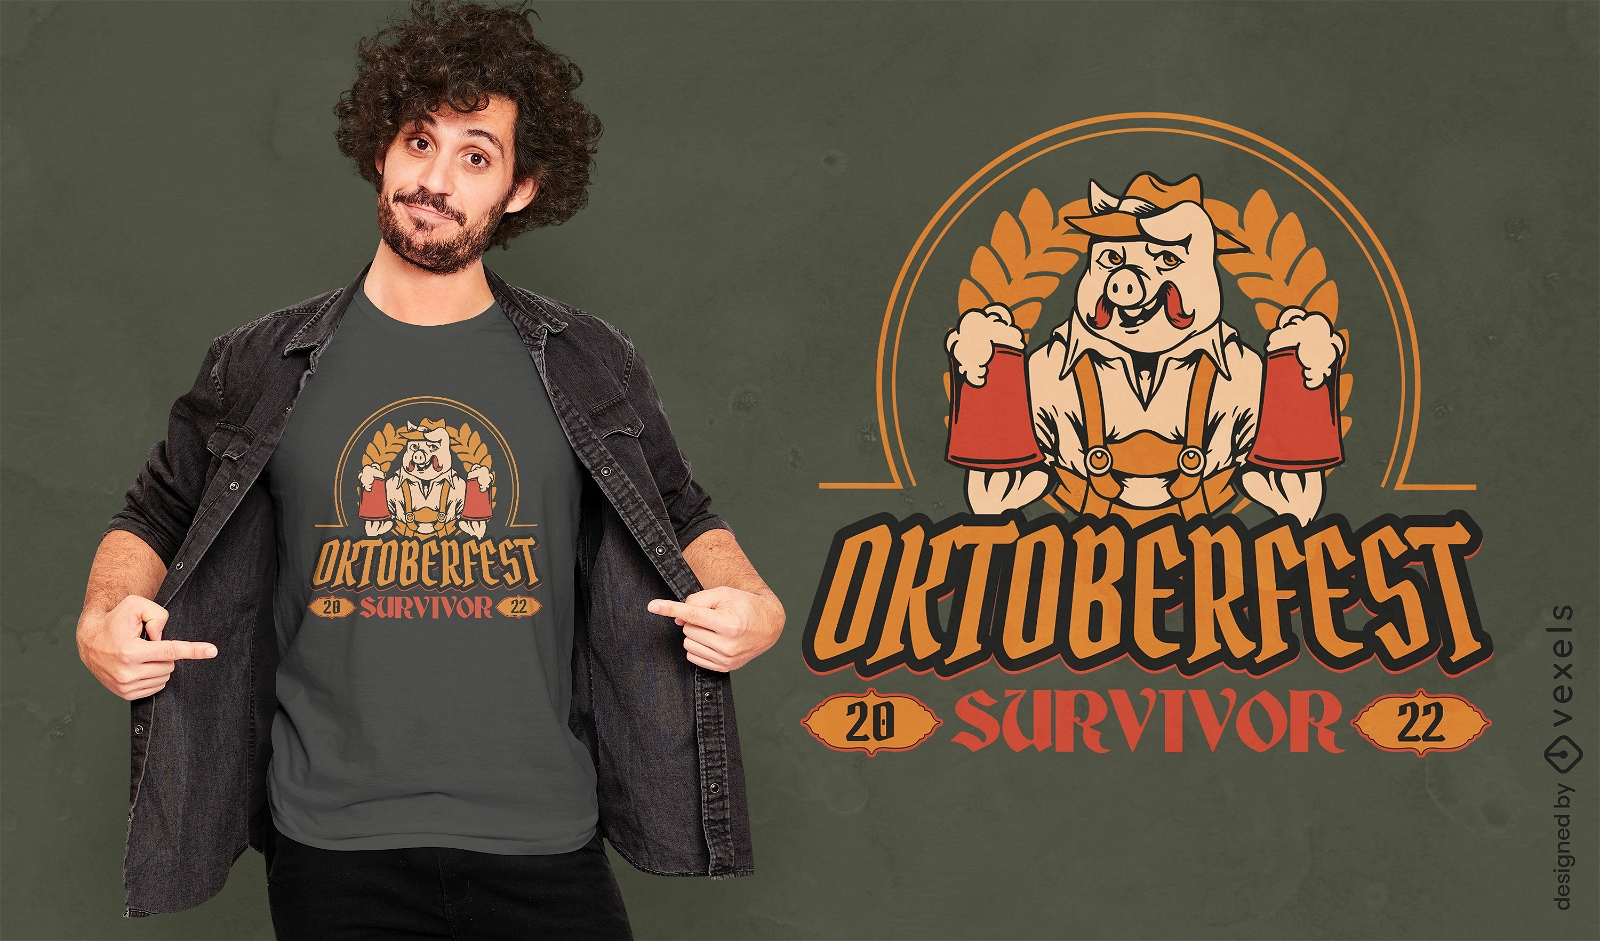 Oktoberfest survivor t-shirt design